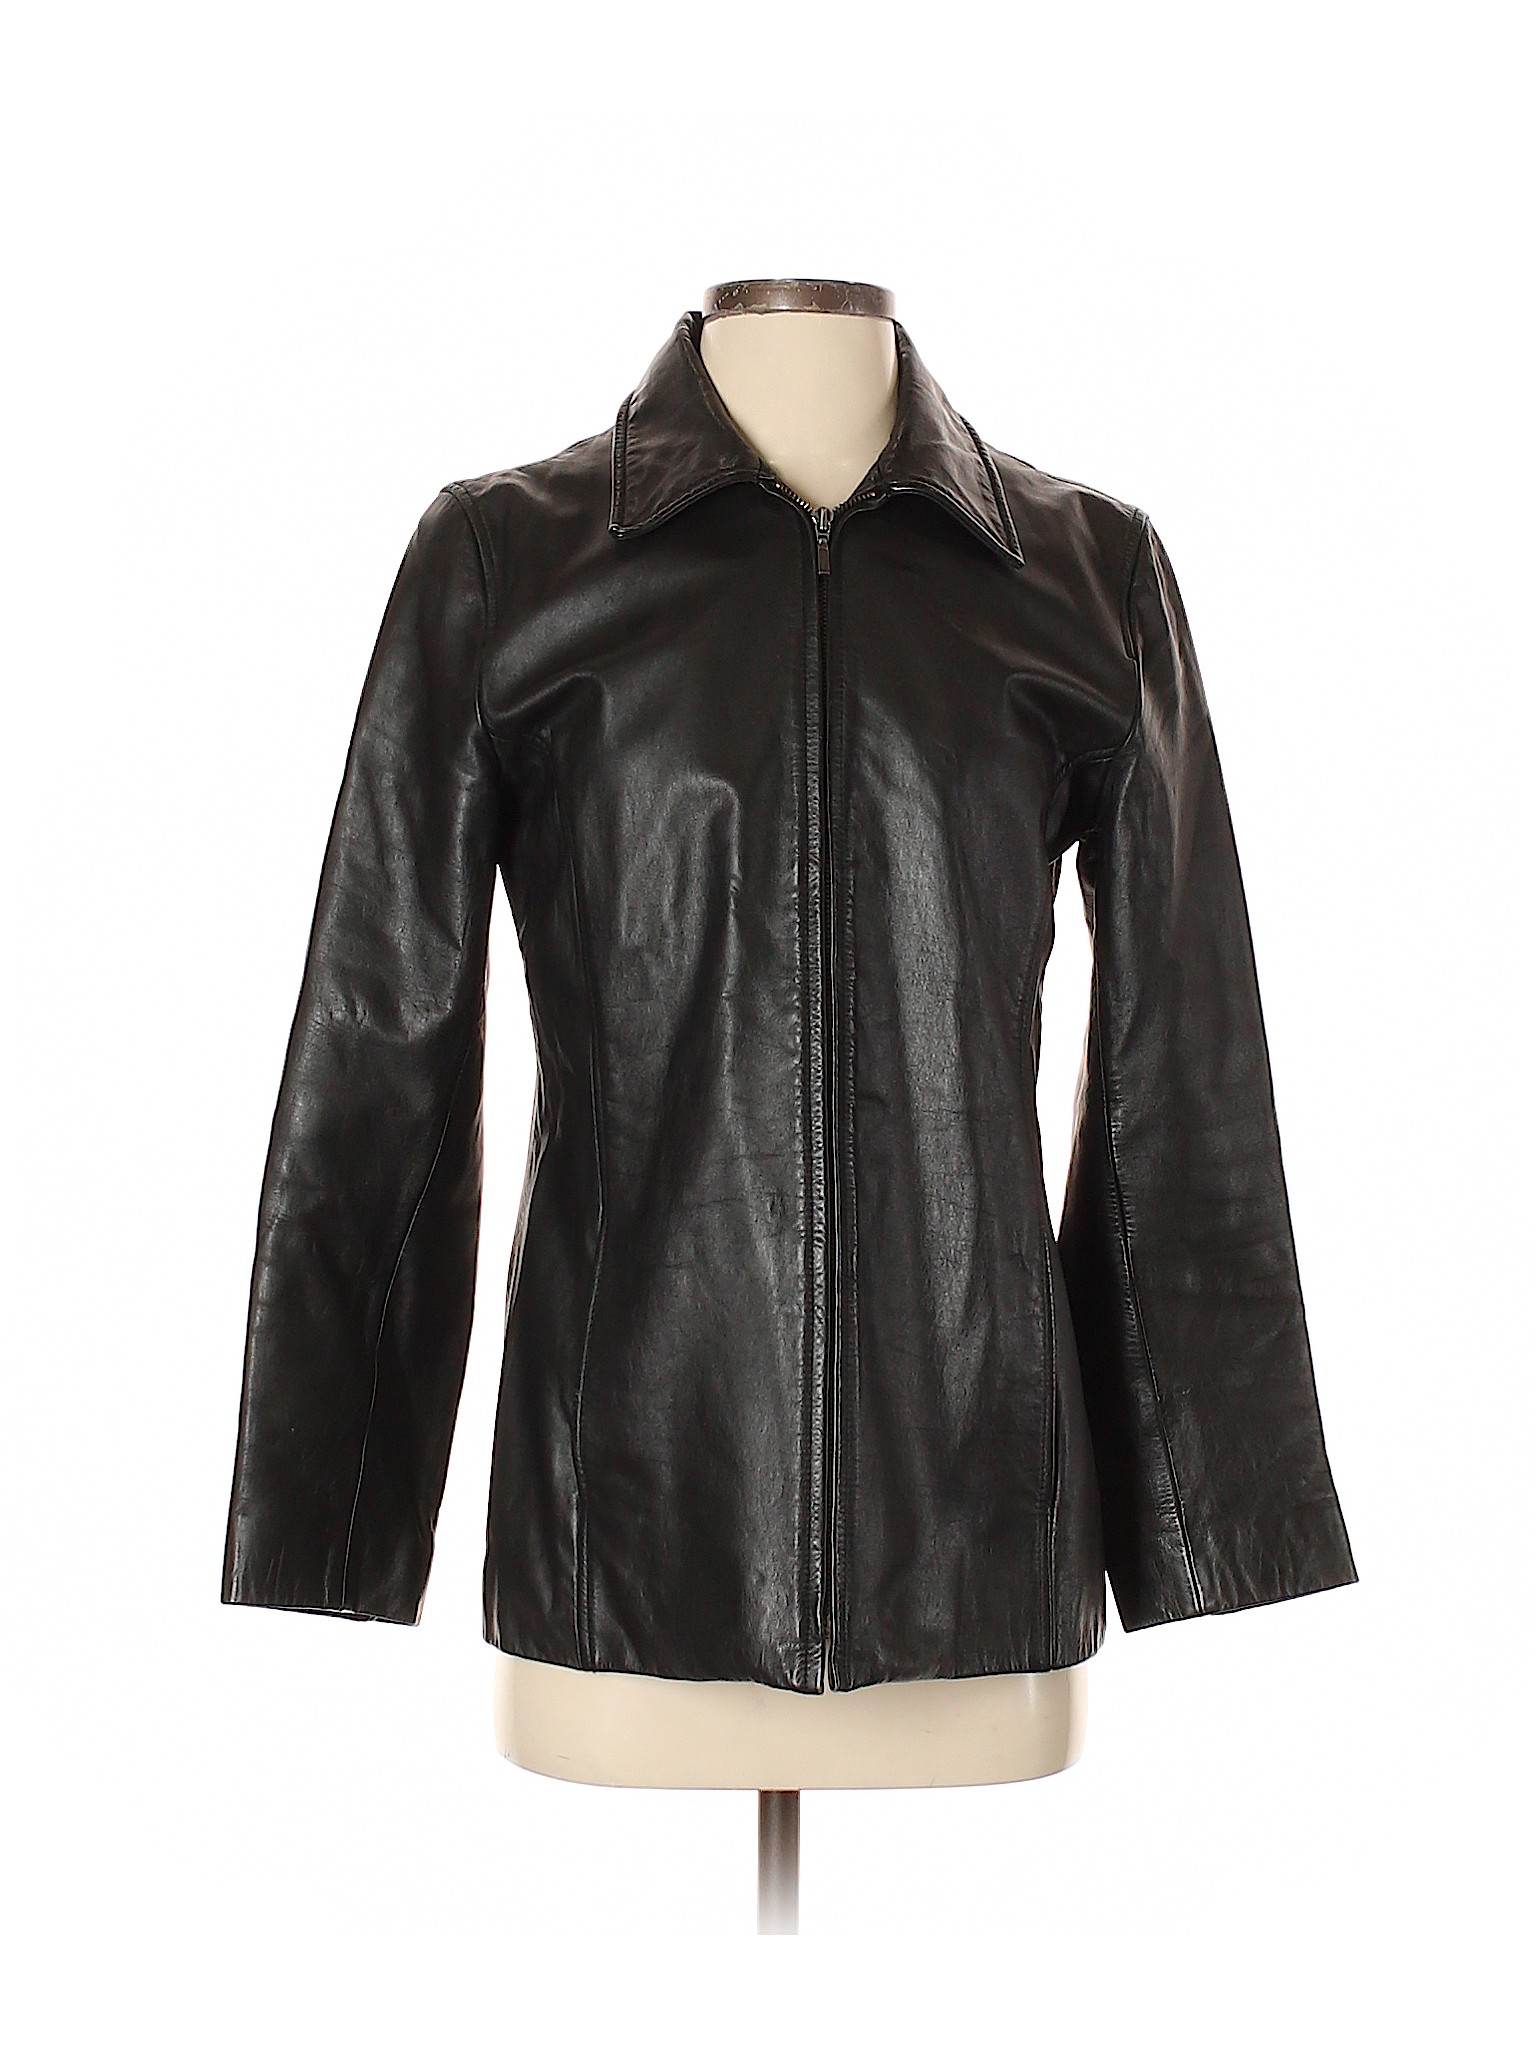 Gap 100% Leather Solid Black Leather Jacket Size S - 87% off | thredUP